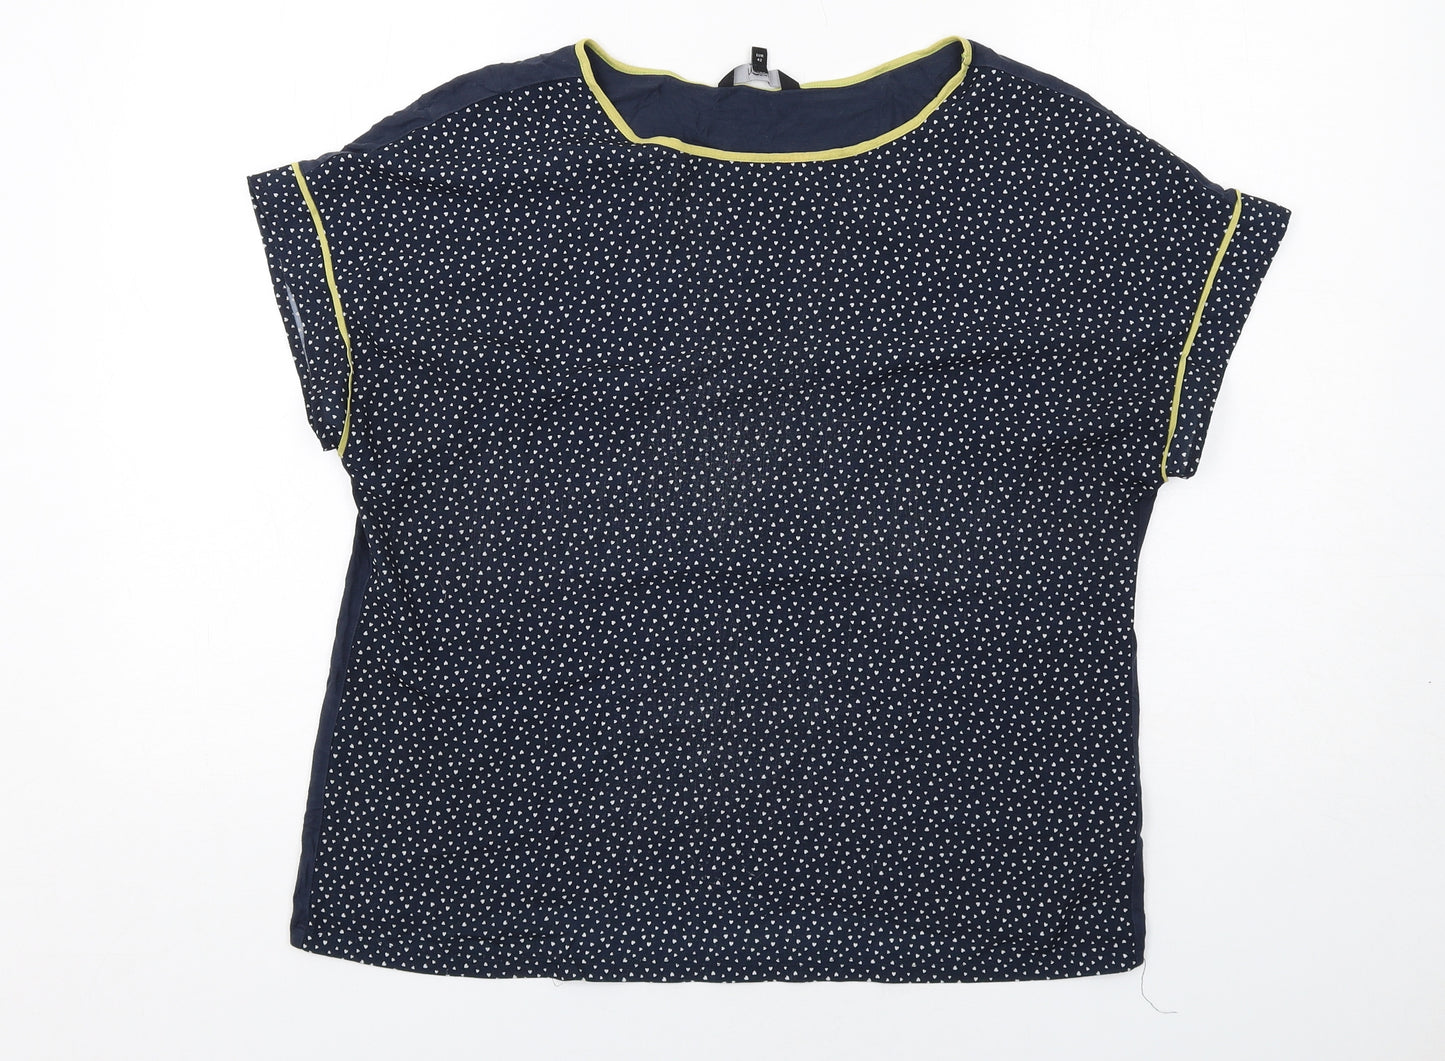 NEXT Womens Blue Geometric Polyester Basic T-Shirt Size 14 Round Neck - Heart Pattern